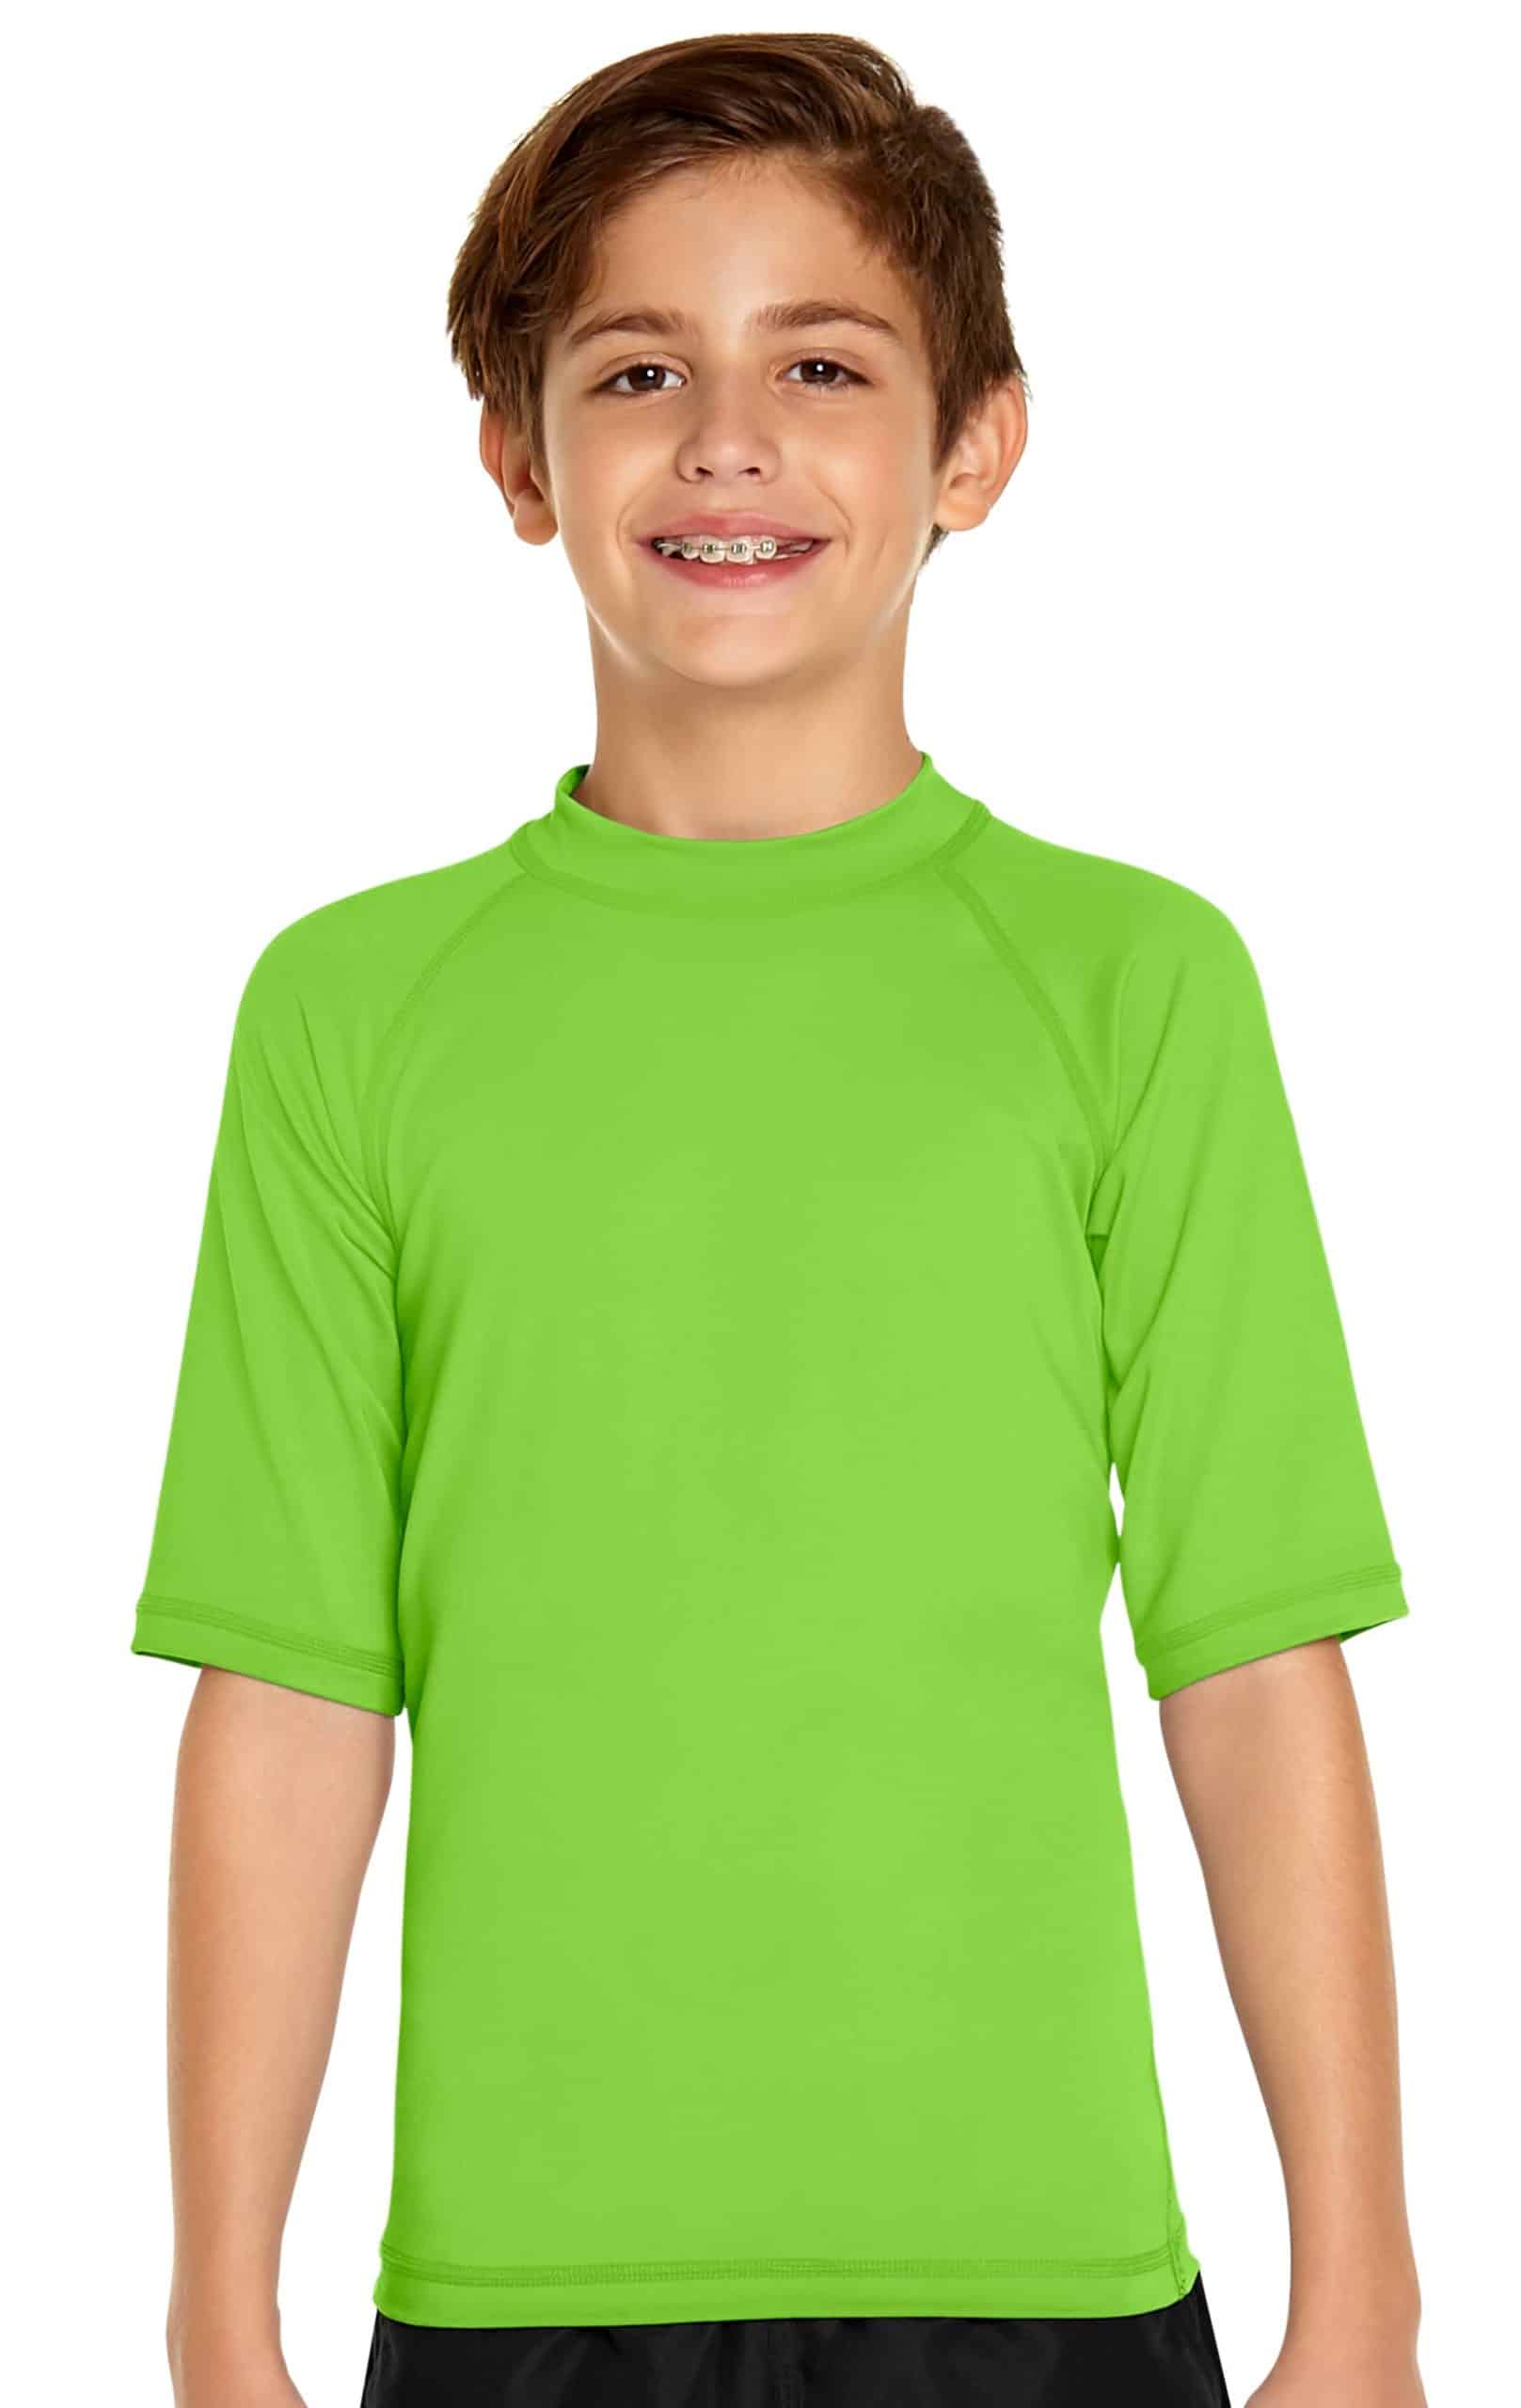 Boy's Short Sleeve Rash Guard - Lime Green - Wet Effect, Inc.